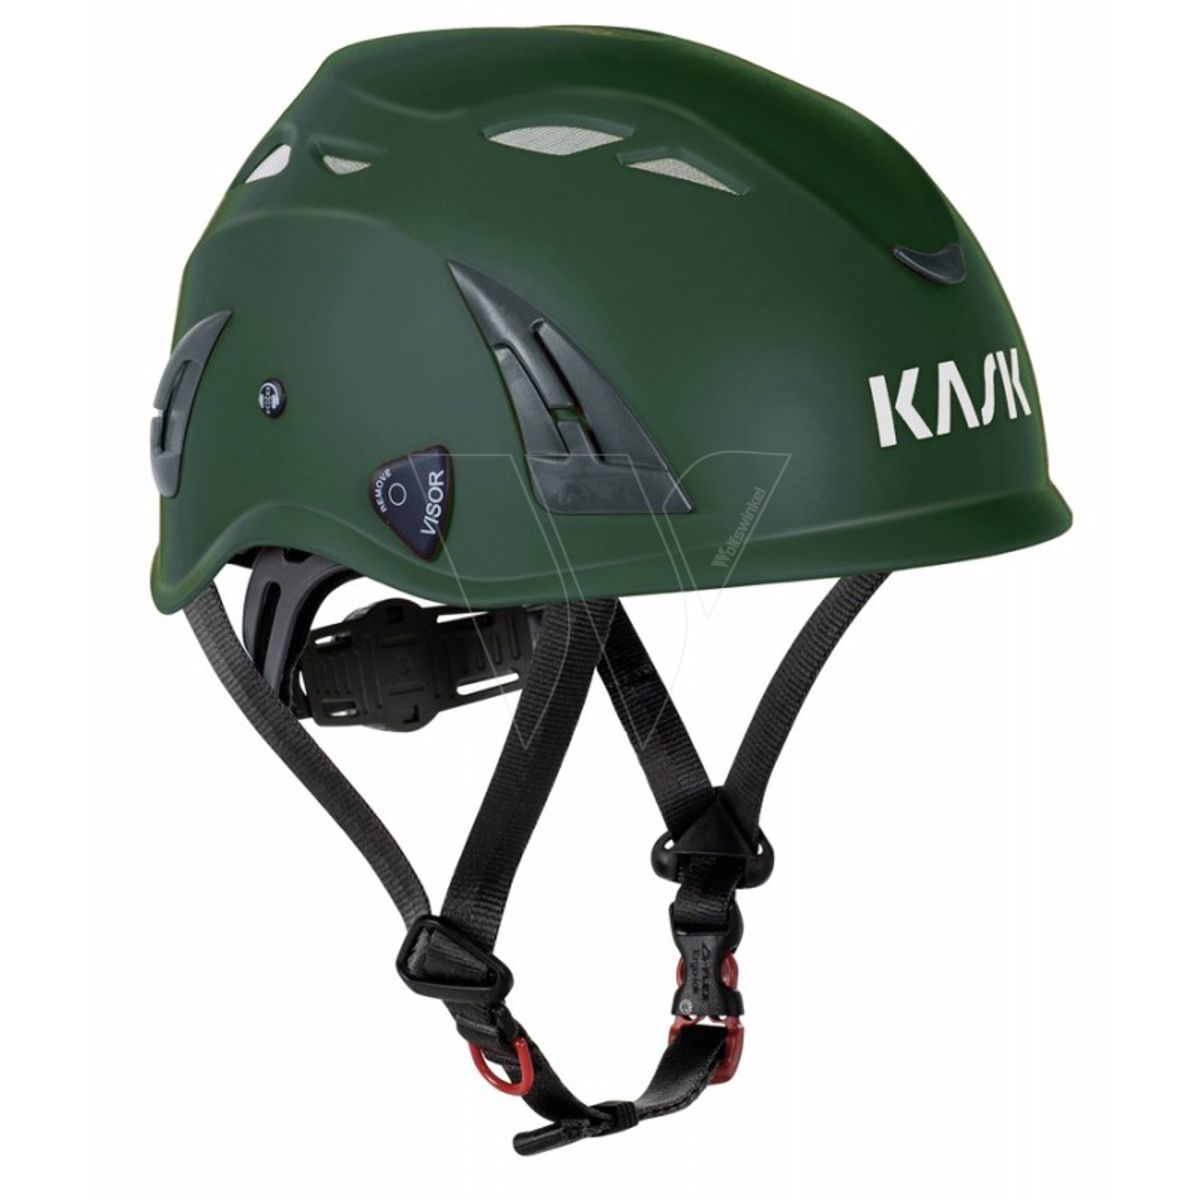 Kask helmet plasma aq - dark green en397